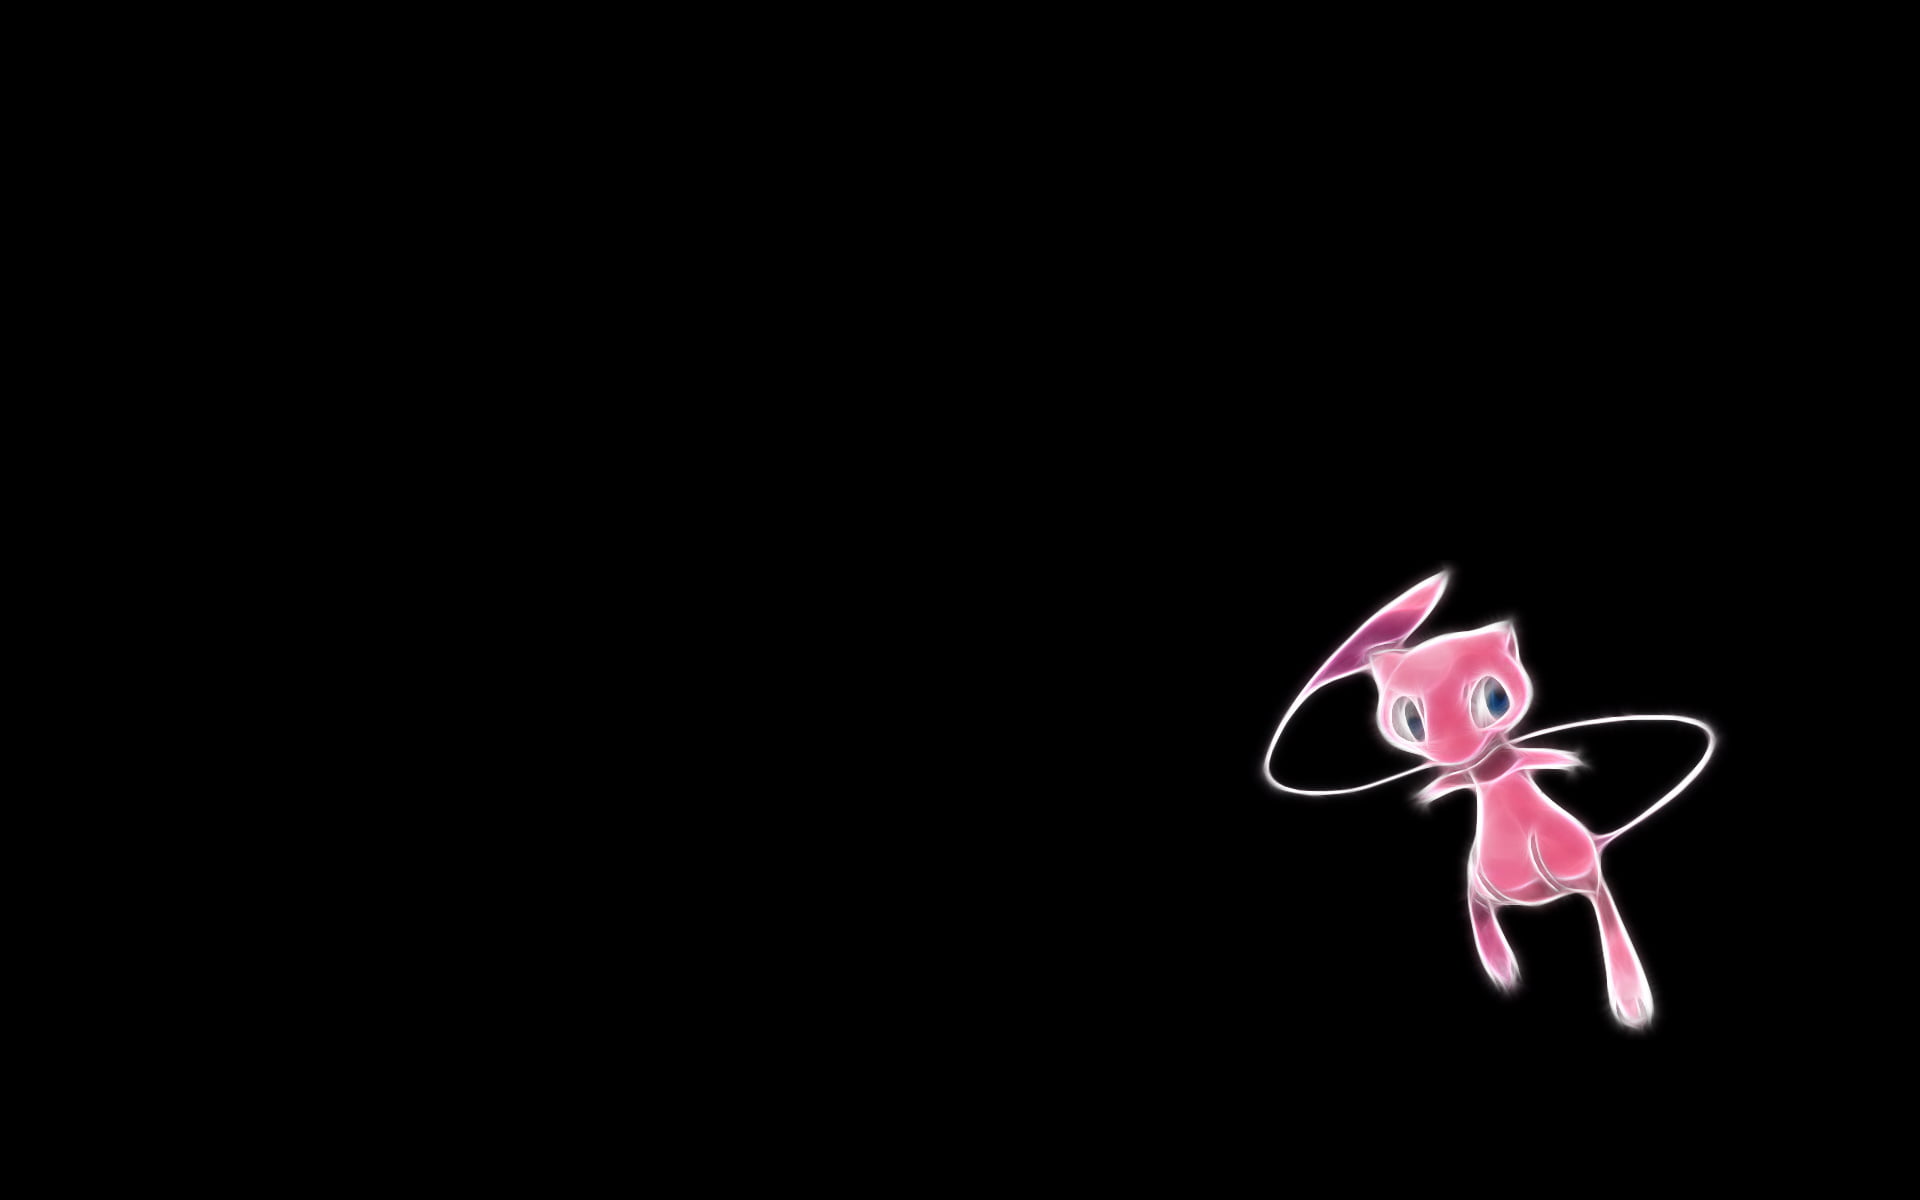 Pink Animal Illustration On Black Background Pok Mon Mew